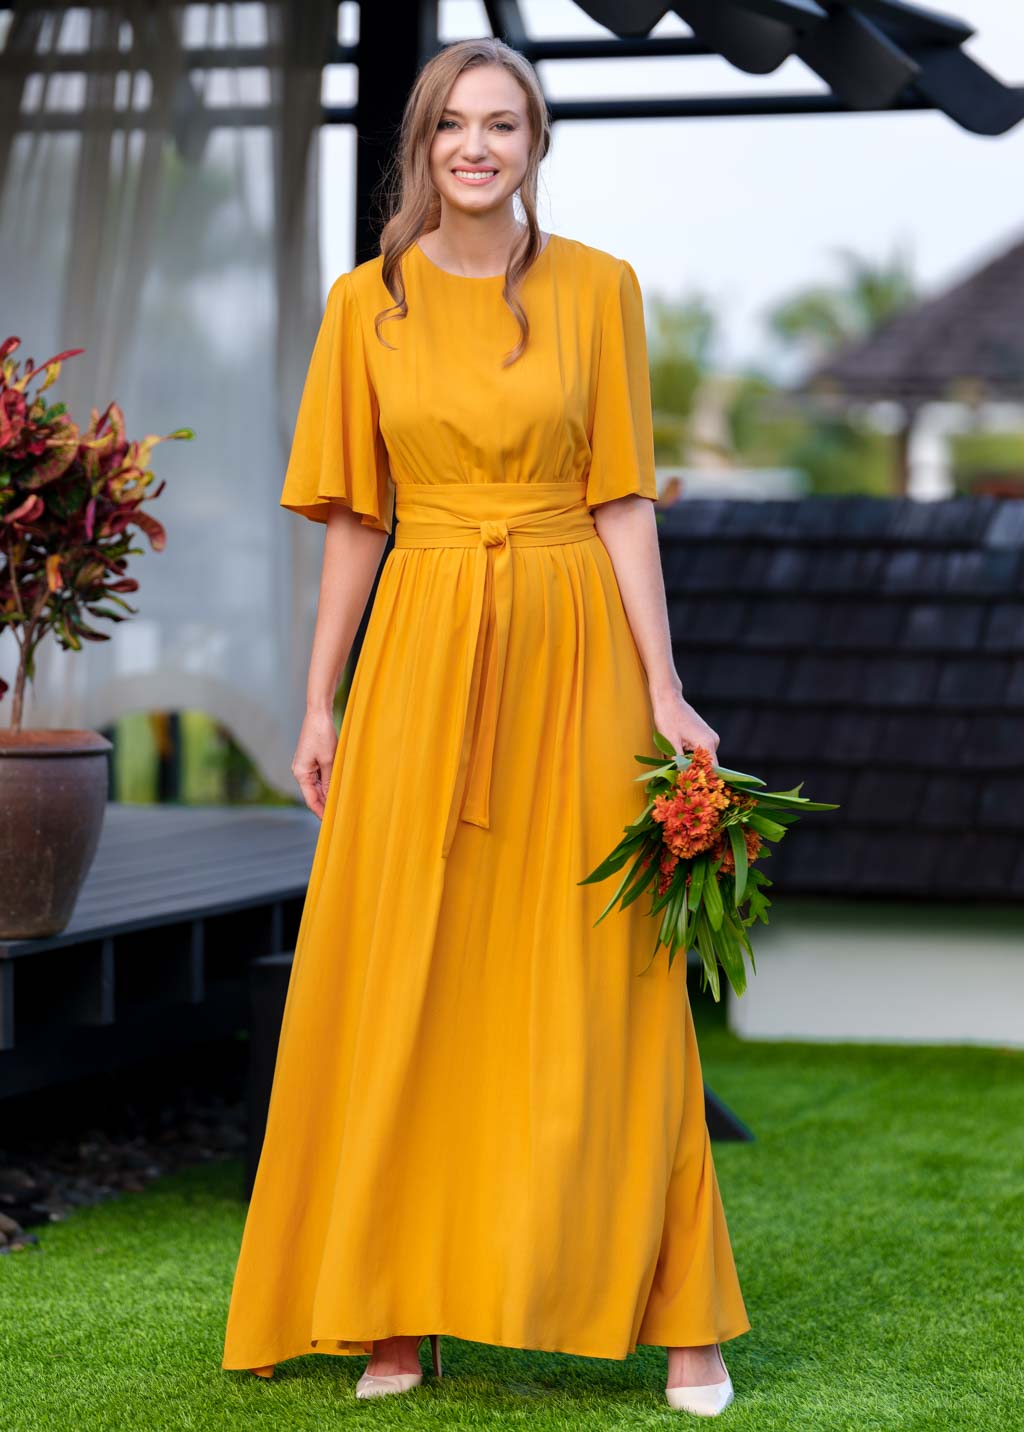 Honey yellow slit dress with belt